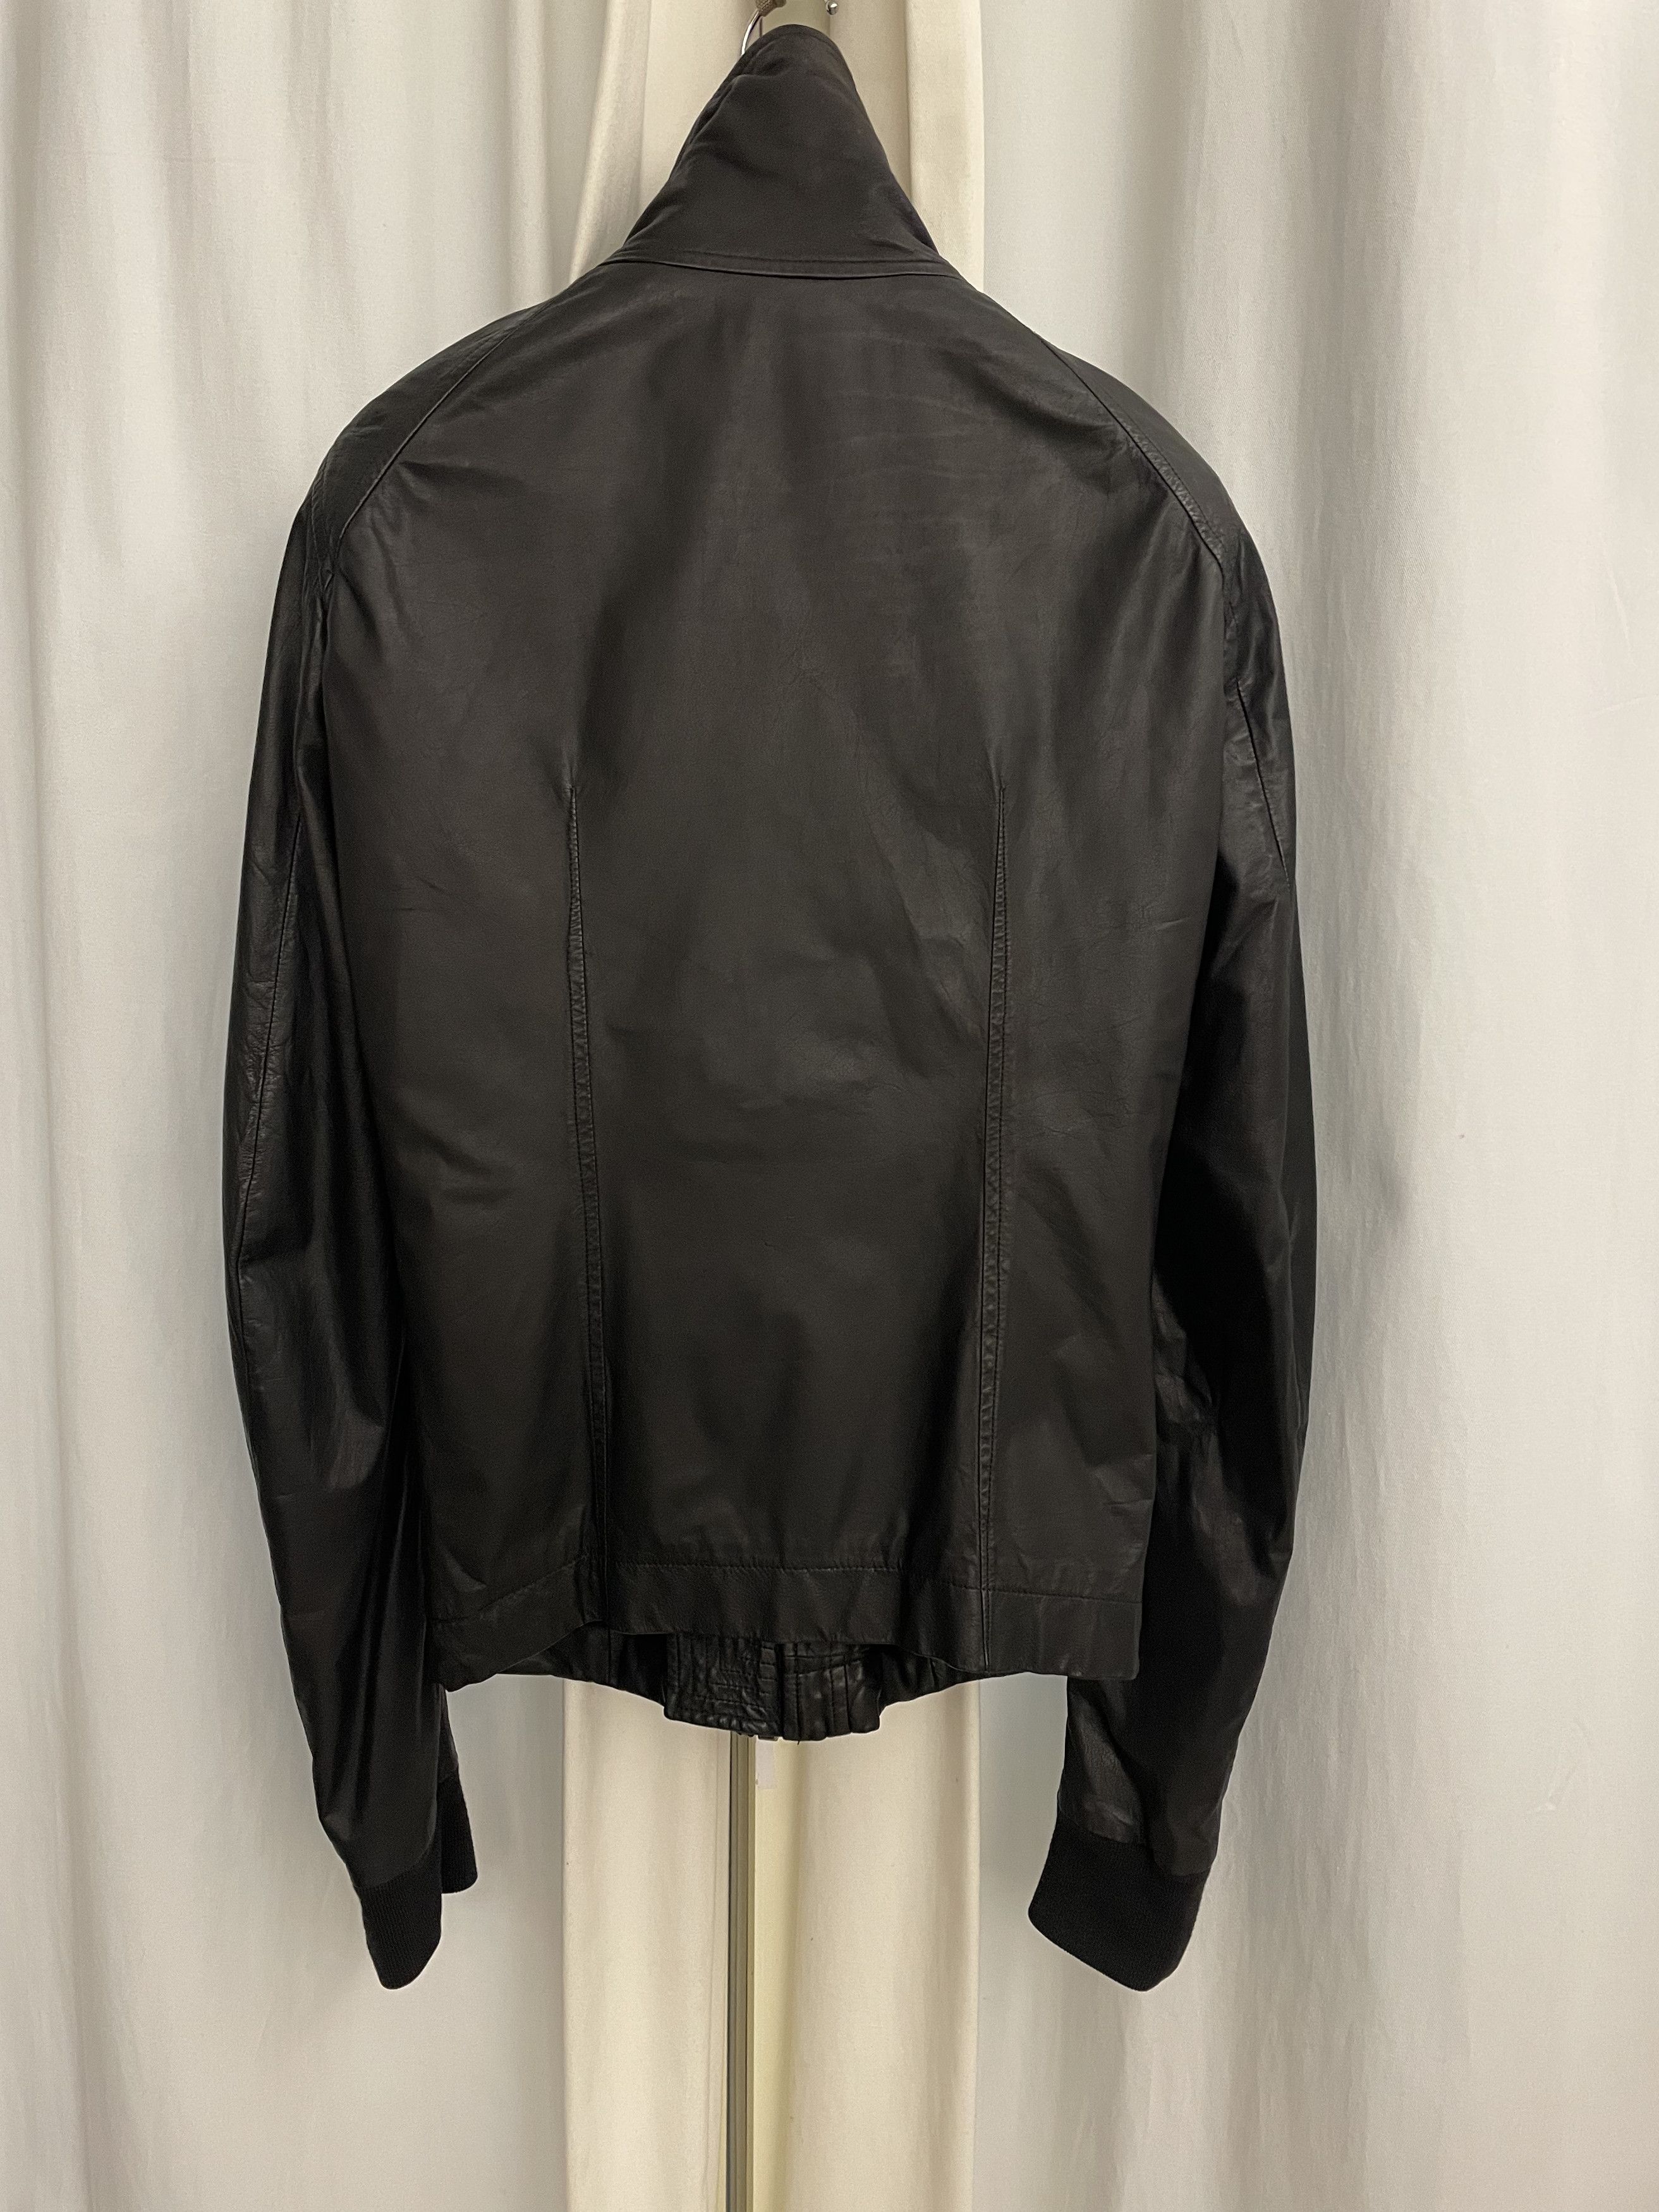 Rick Owens Calf leather Intarsia jacket 46 | Grailed